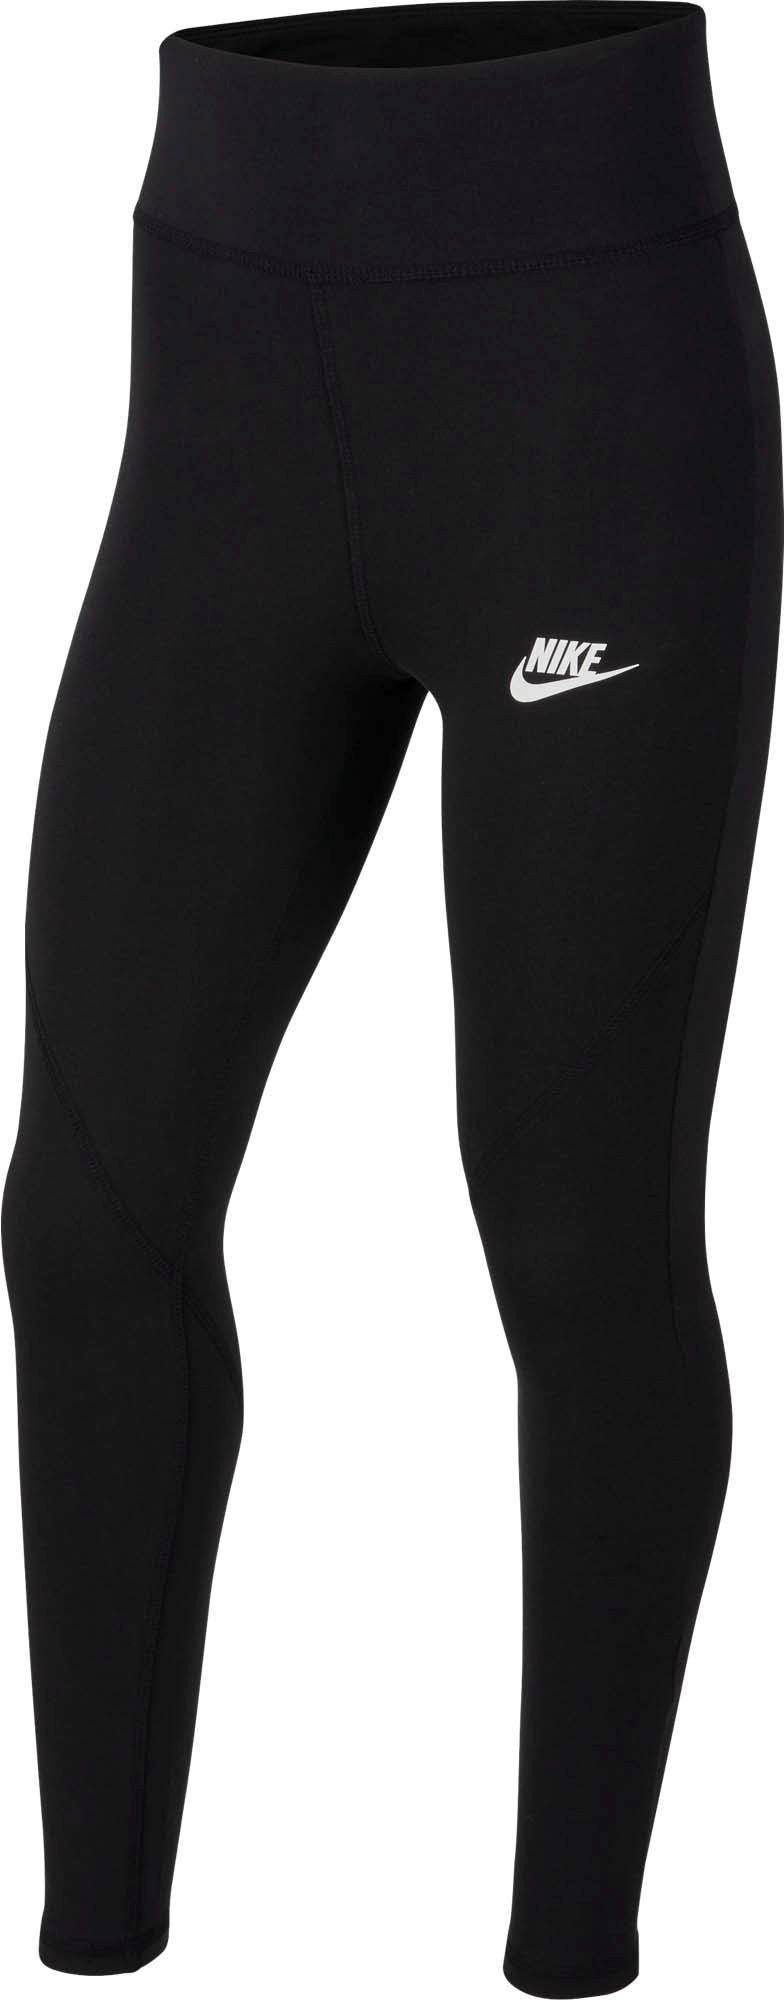 Nike Sportswear Leggings FAVORITES BIG Kinder (GIRLS) - LEGGINGS schwarz HIGH-WAISTED KIDS' für